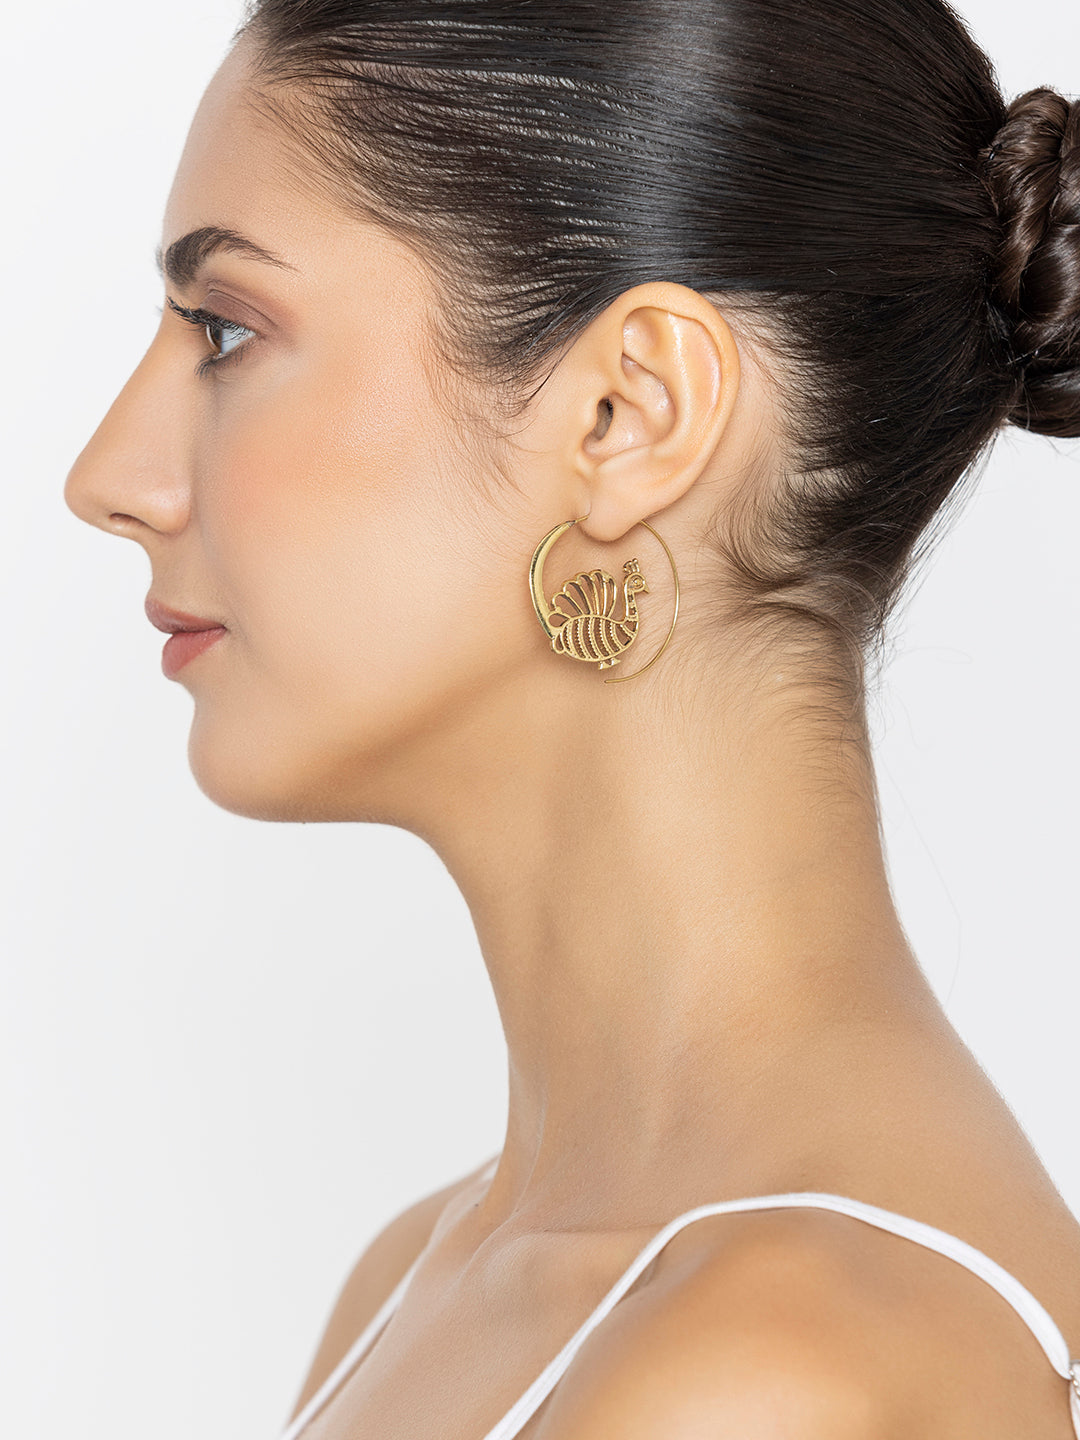 Festive Wear Hoops Earrings - Peacock Pride Gold and Silver-Plated Brass Earrings By Studio One Love